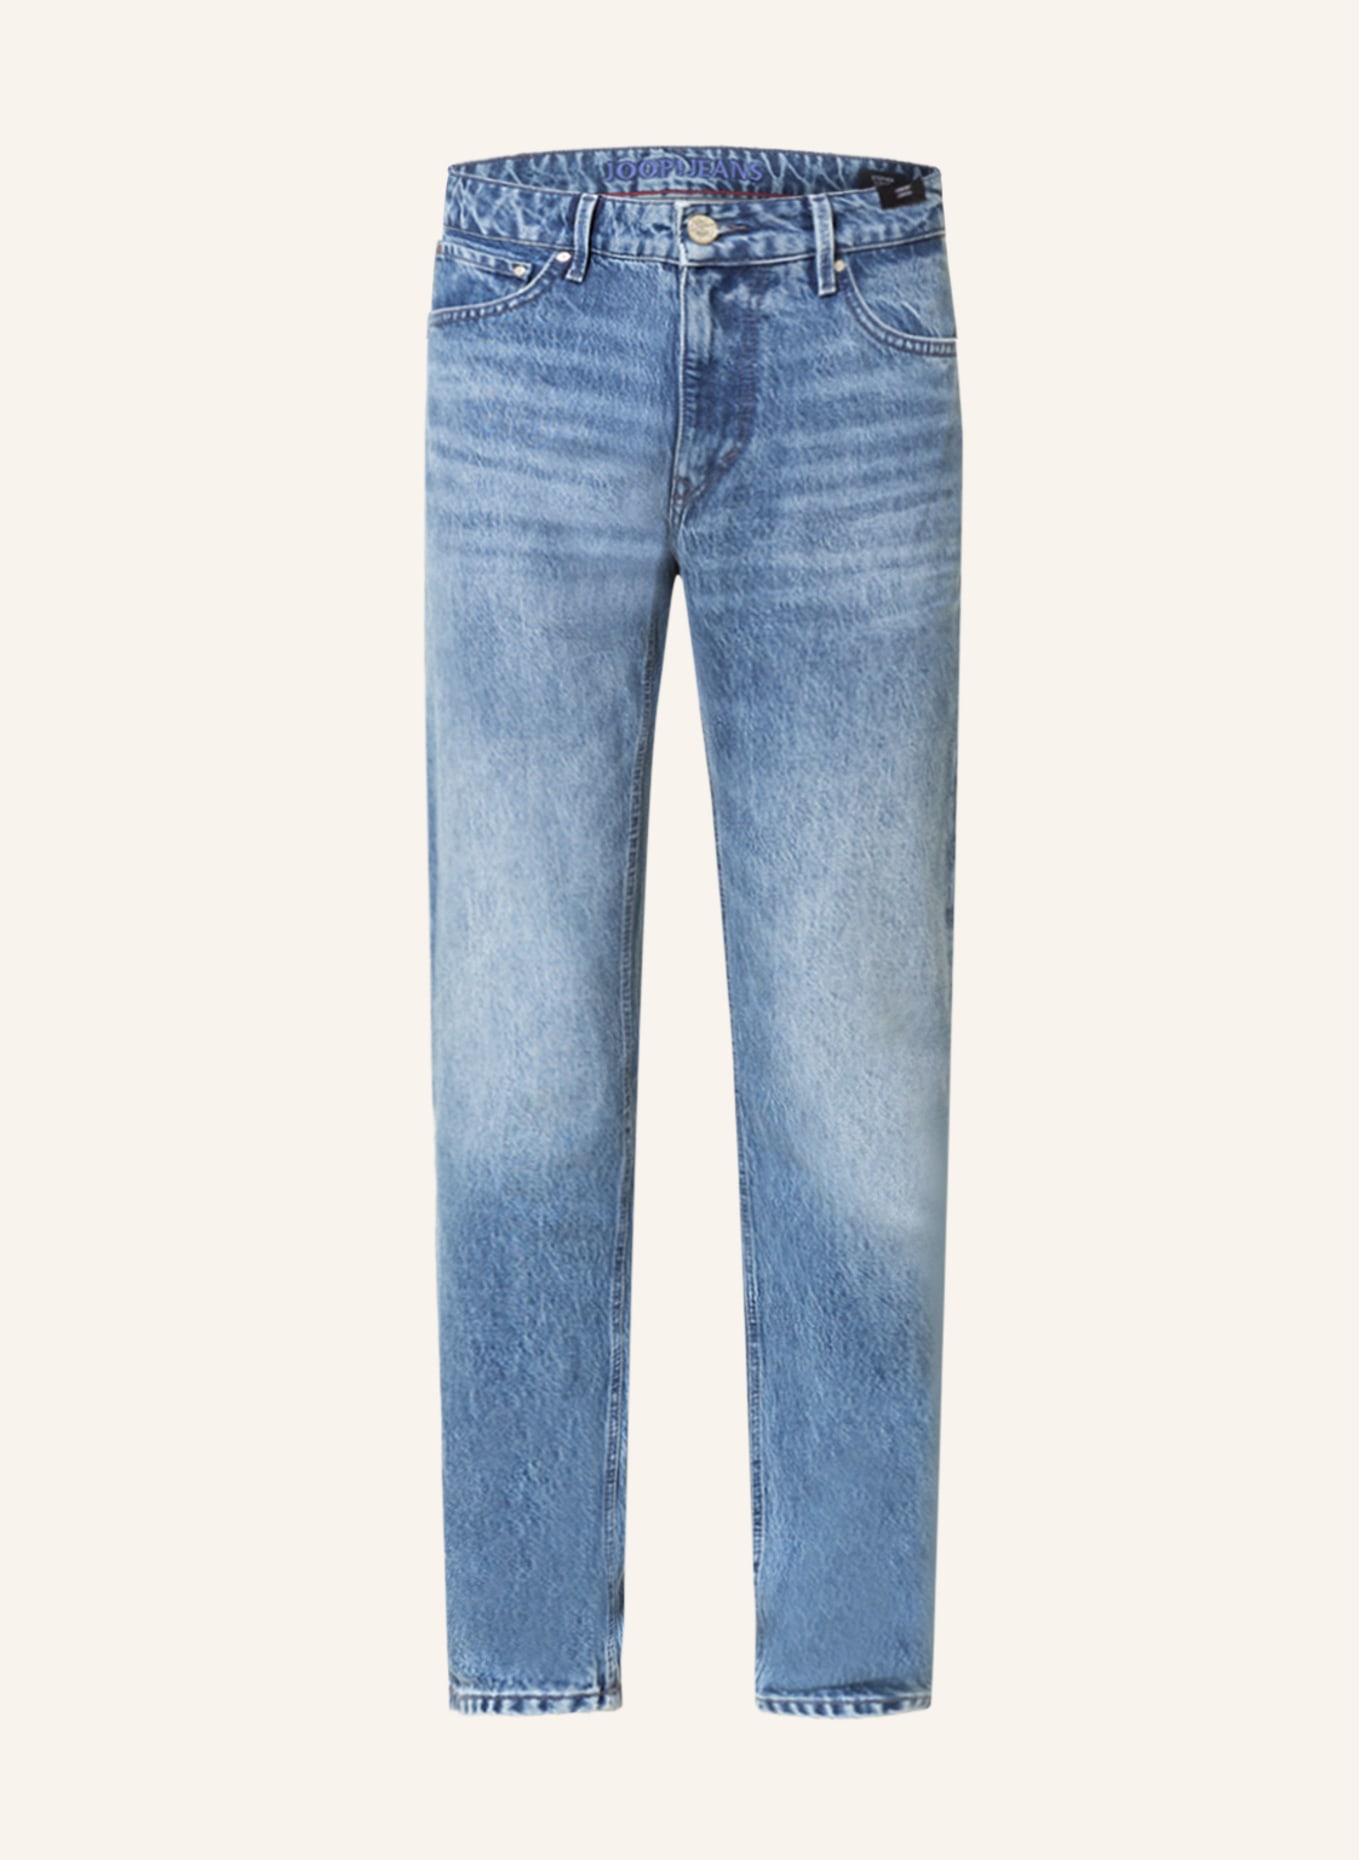 JOOP! JEANS Jeans STEPHEN Slim Fit, Farbe: 435 Bright Blue                435 (Bild 1)